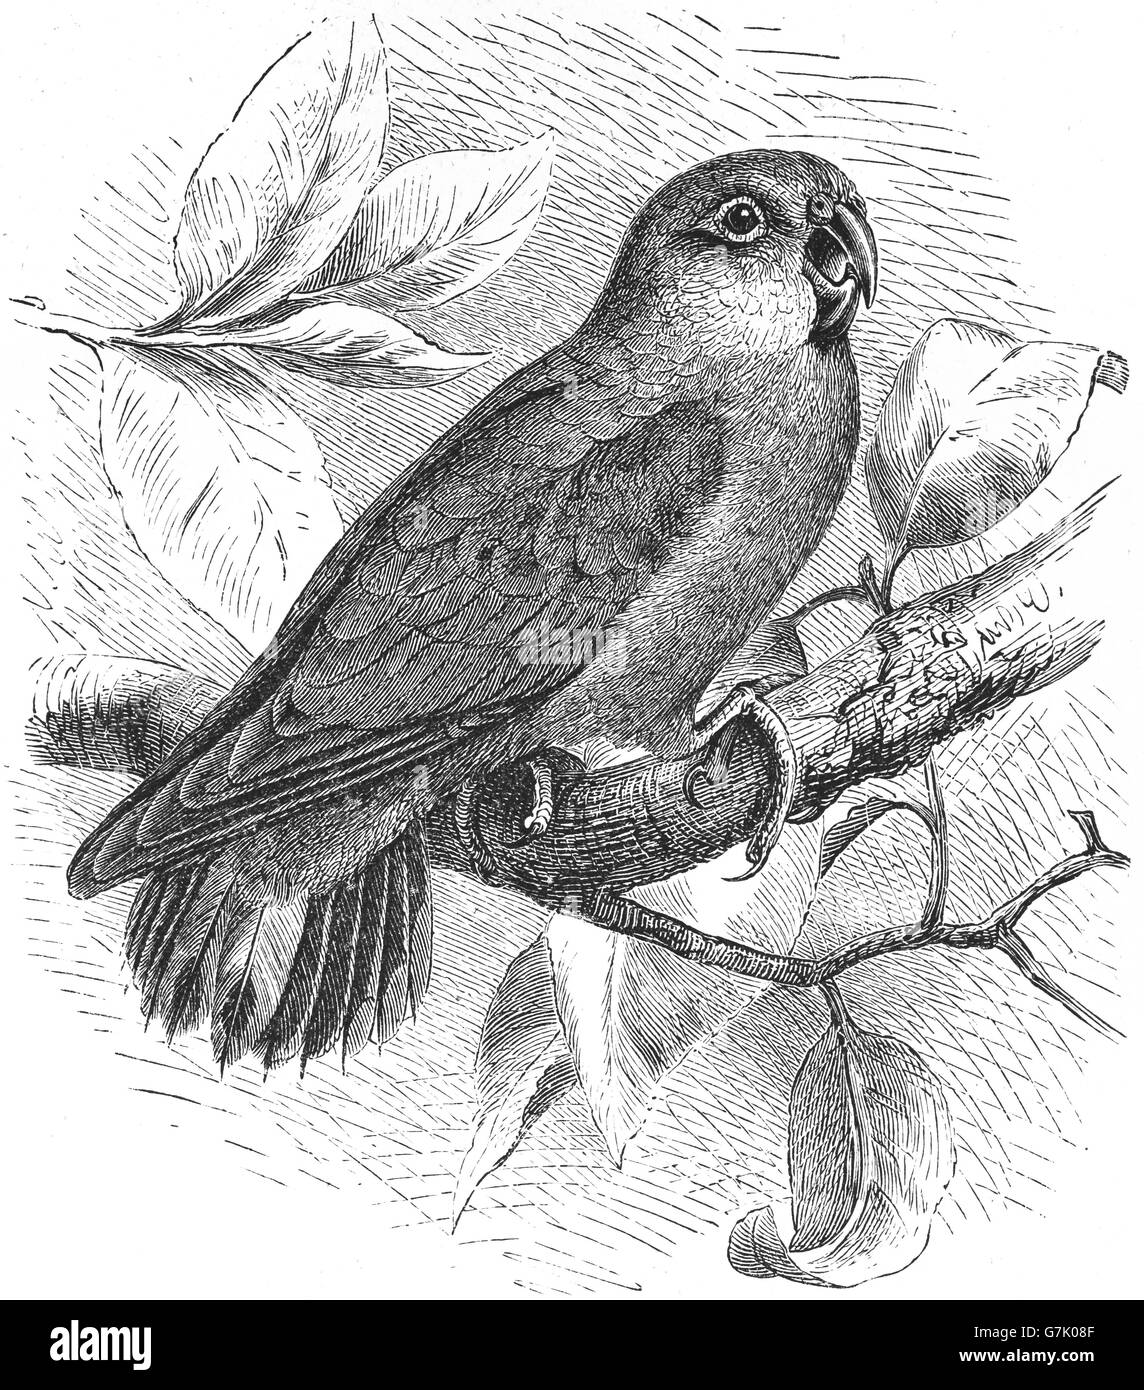 Geelvink pygmy parrot, Micropsitta geelvinkiana, illustration from book dated 1904 Stock Photo